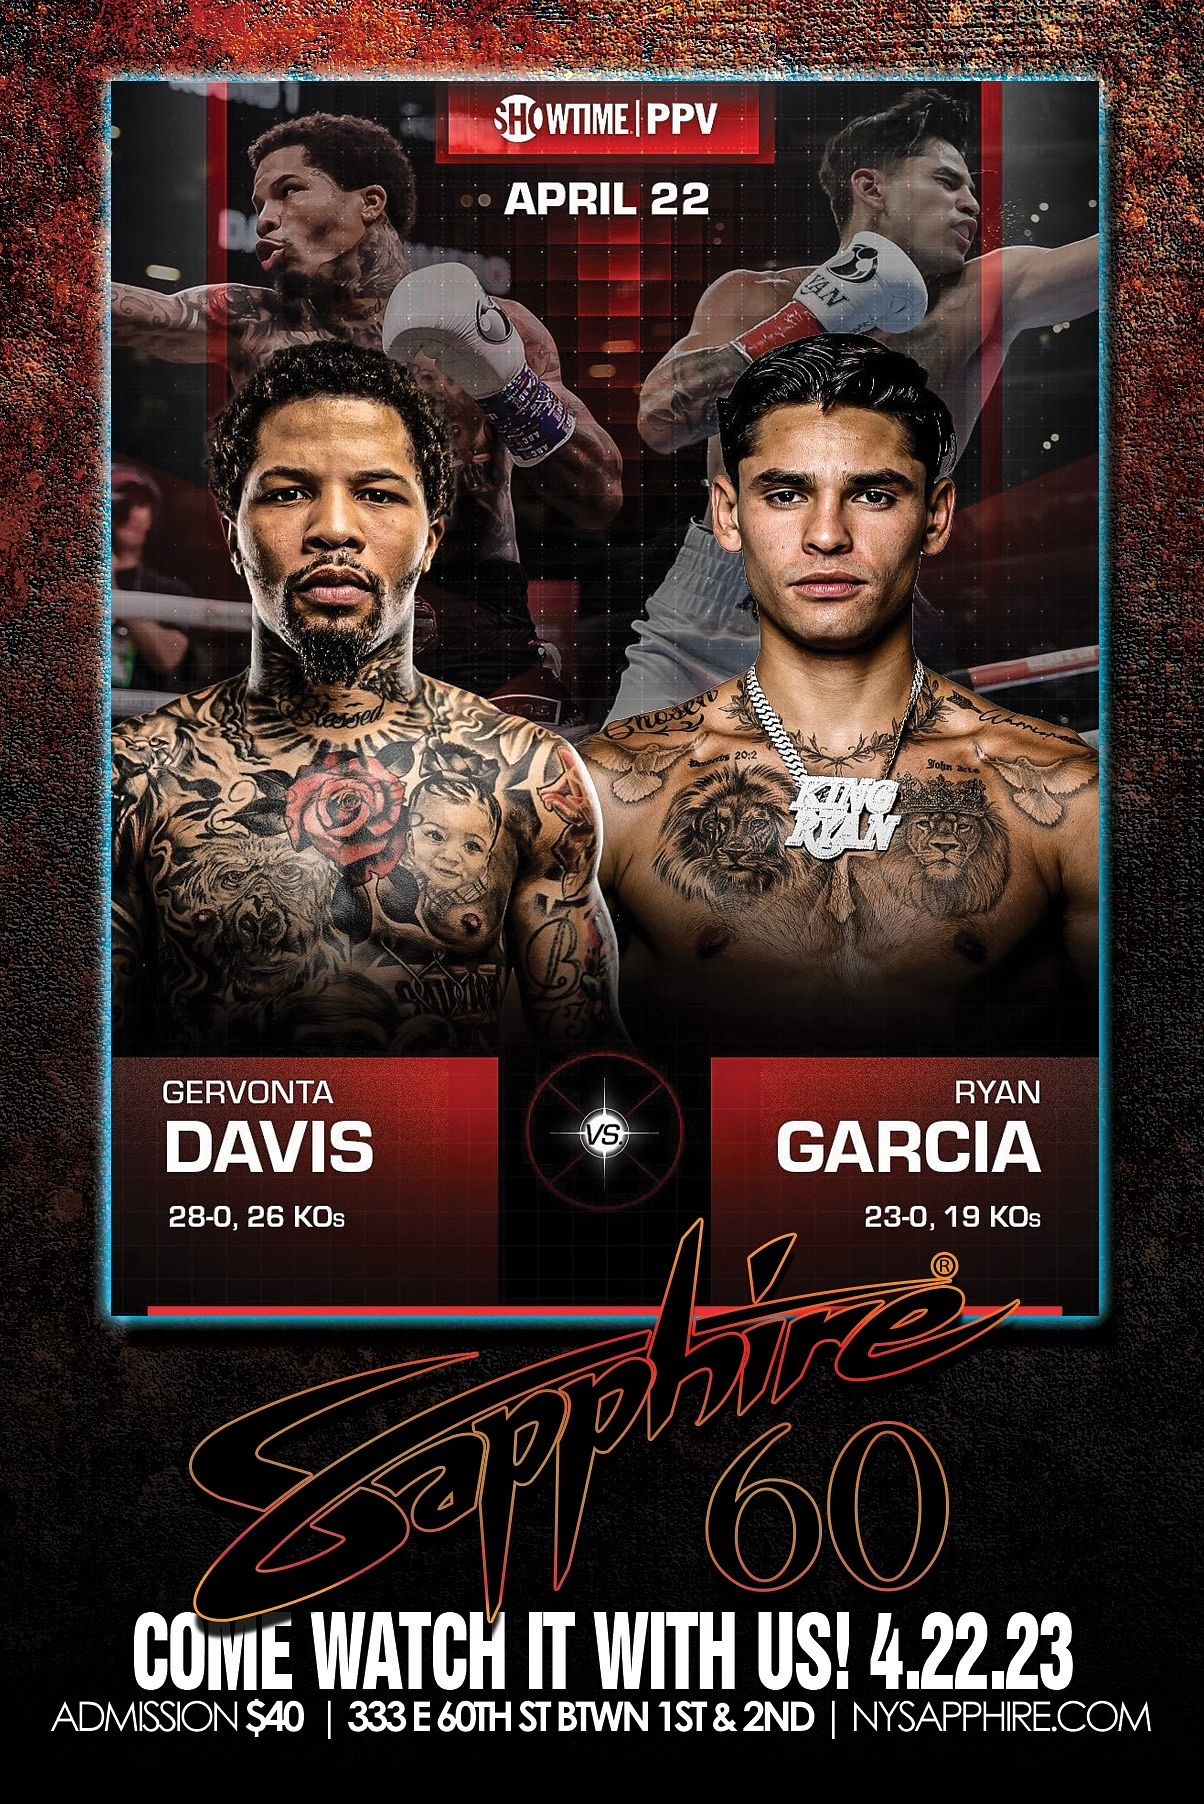 Davis vs Garcia Tickets at Sapphire 60 in New York by Sapphire Tixr